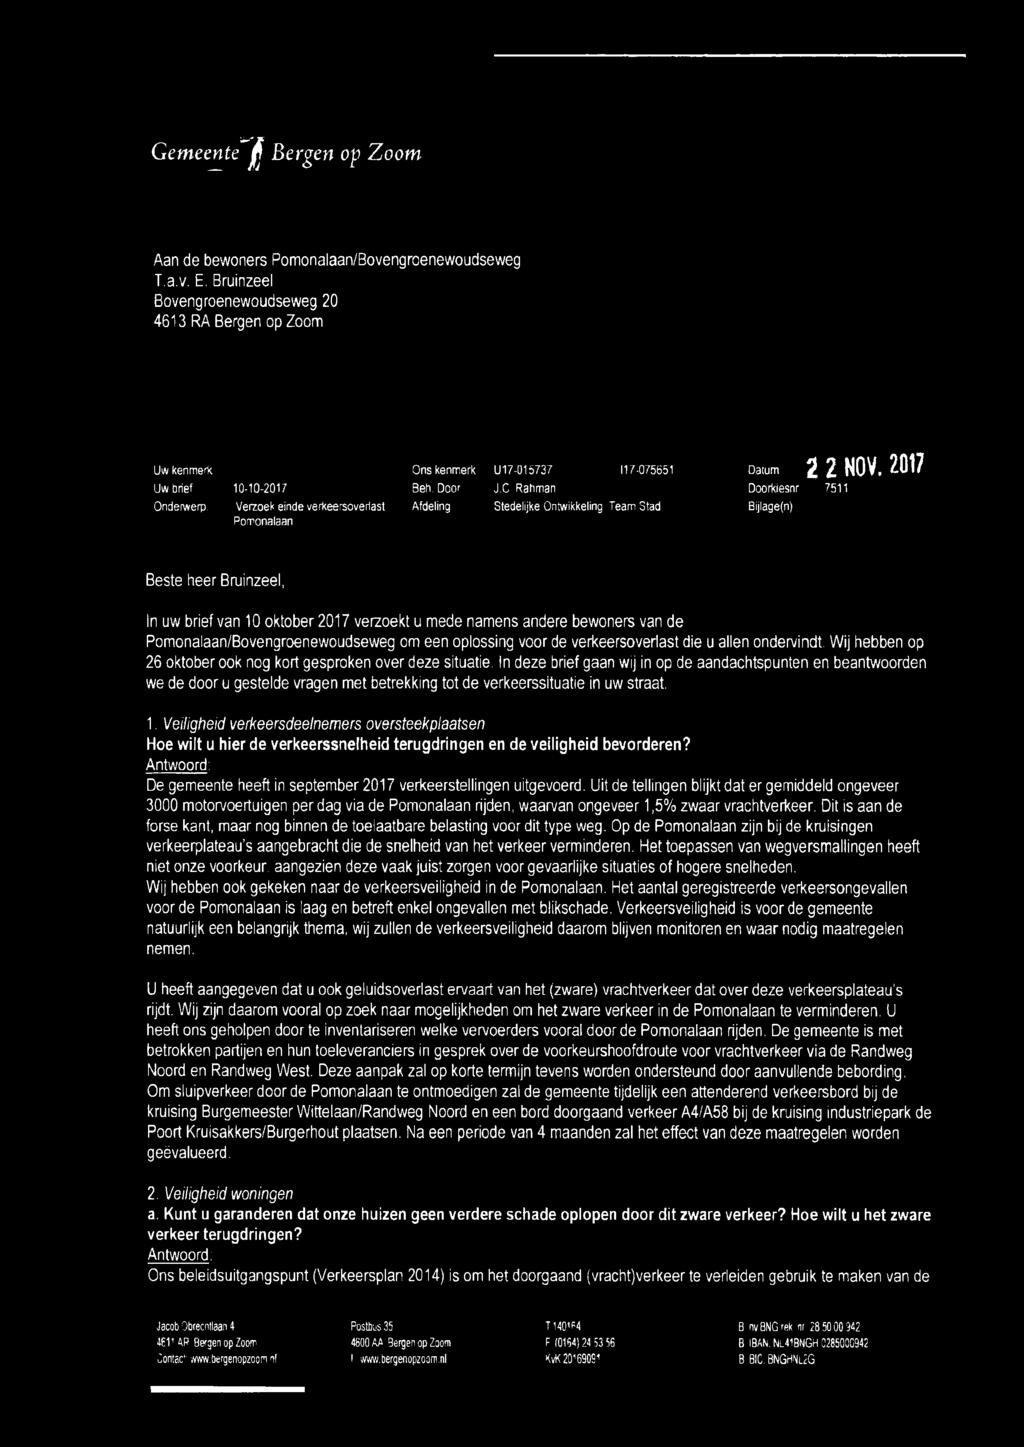 C Rahman Doorkiesnr Afdeling Stedelijke Ontwikkeling Team Stad Bijlage(n) 2 2 NOV.